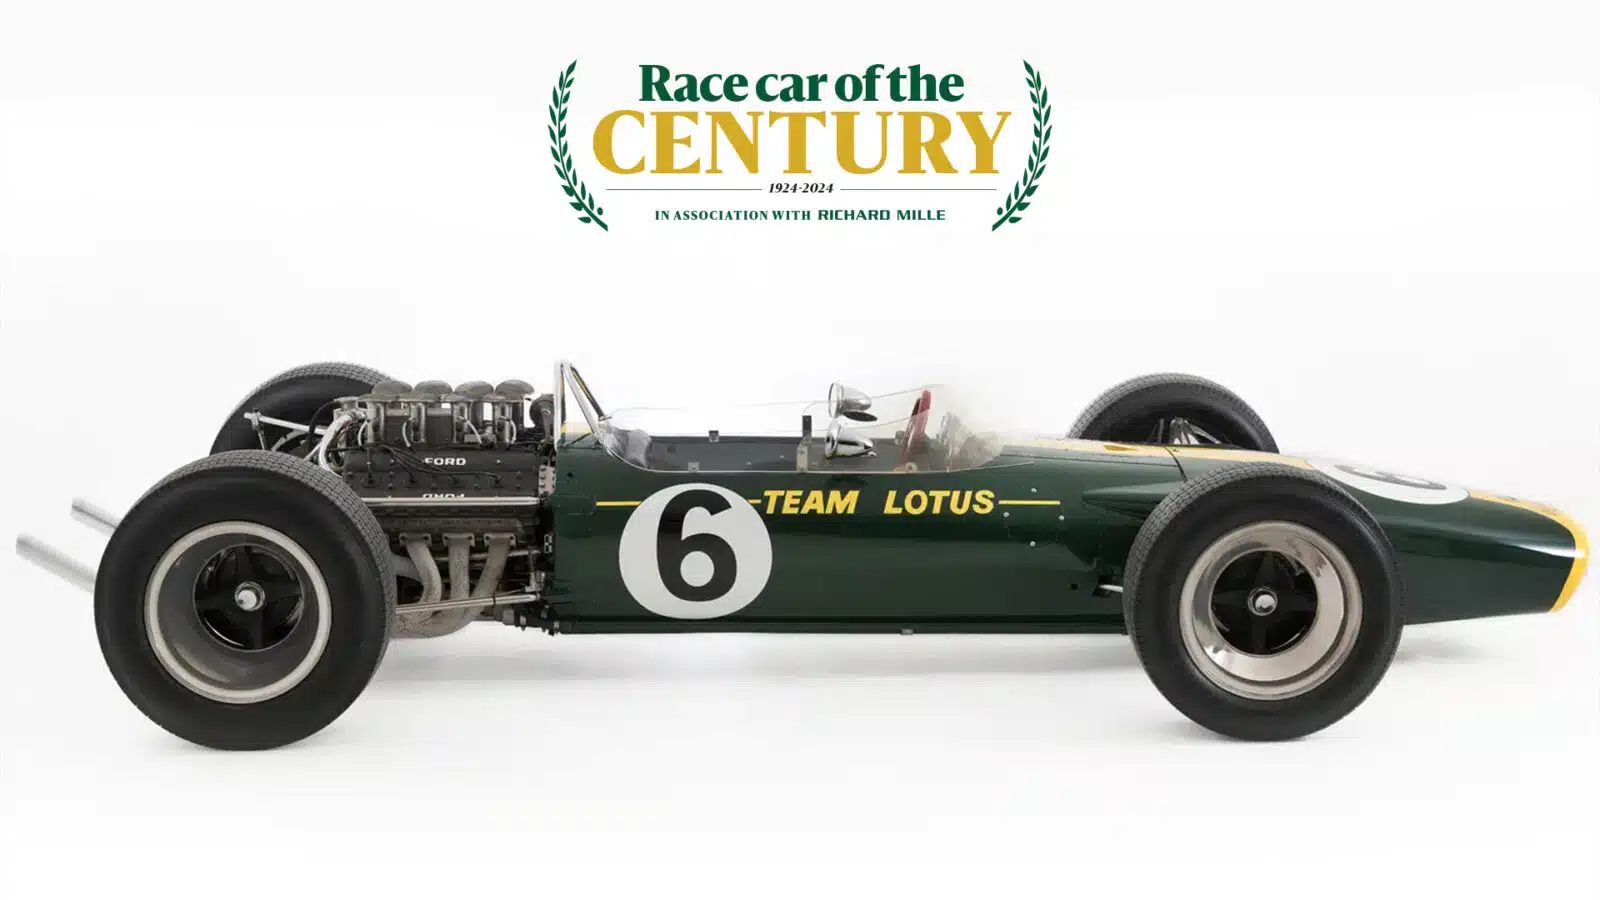 Lotus 49 Race car of the century